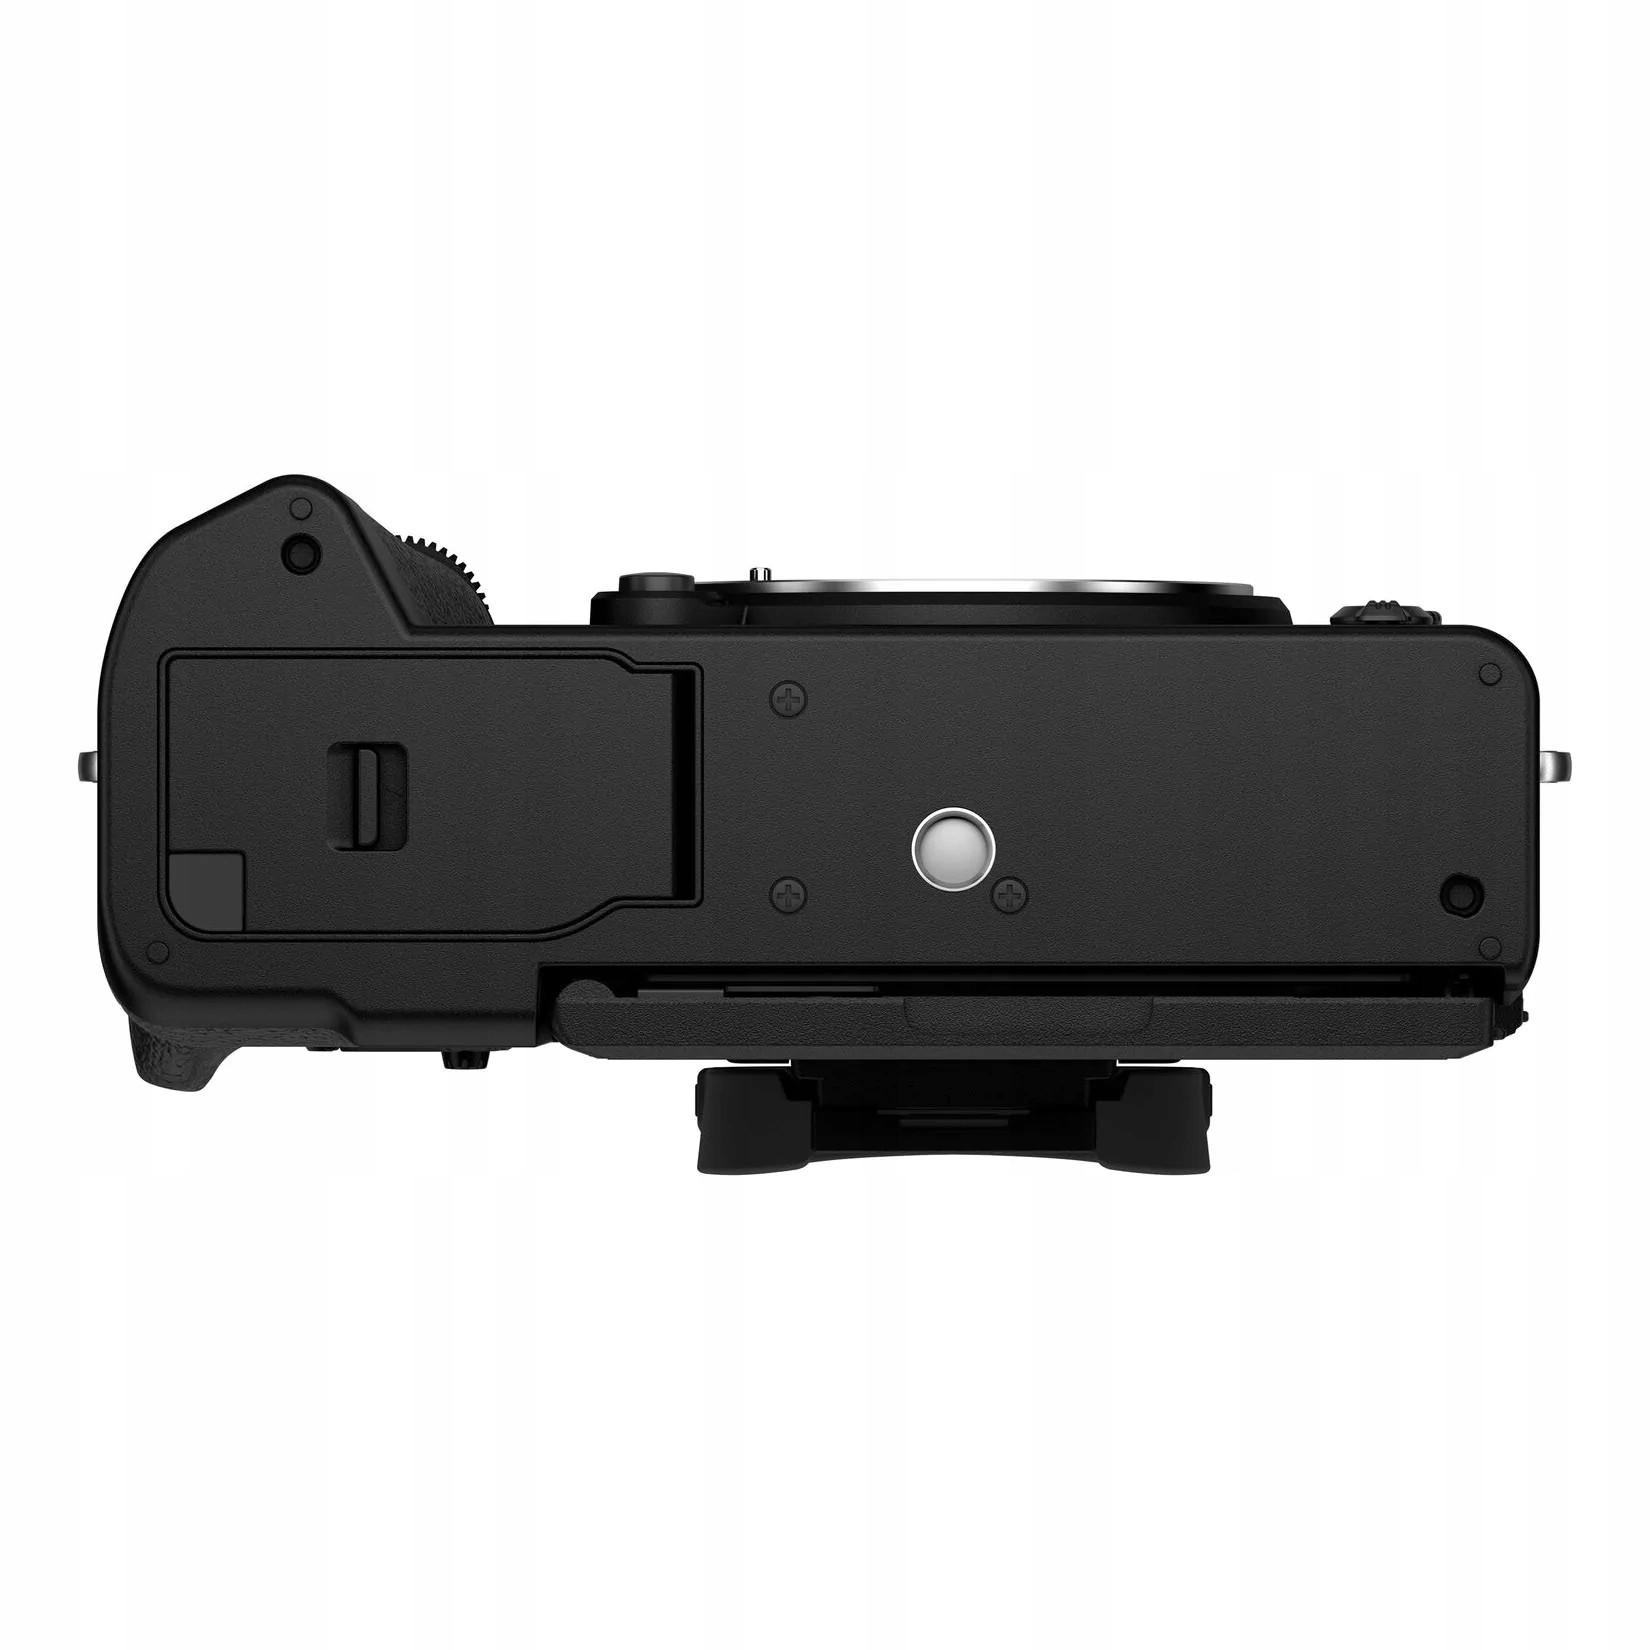 Fujifilm X-T5 + 16-80/4 R OIS WR черный входит в комплект корпус + объектив